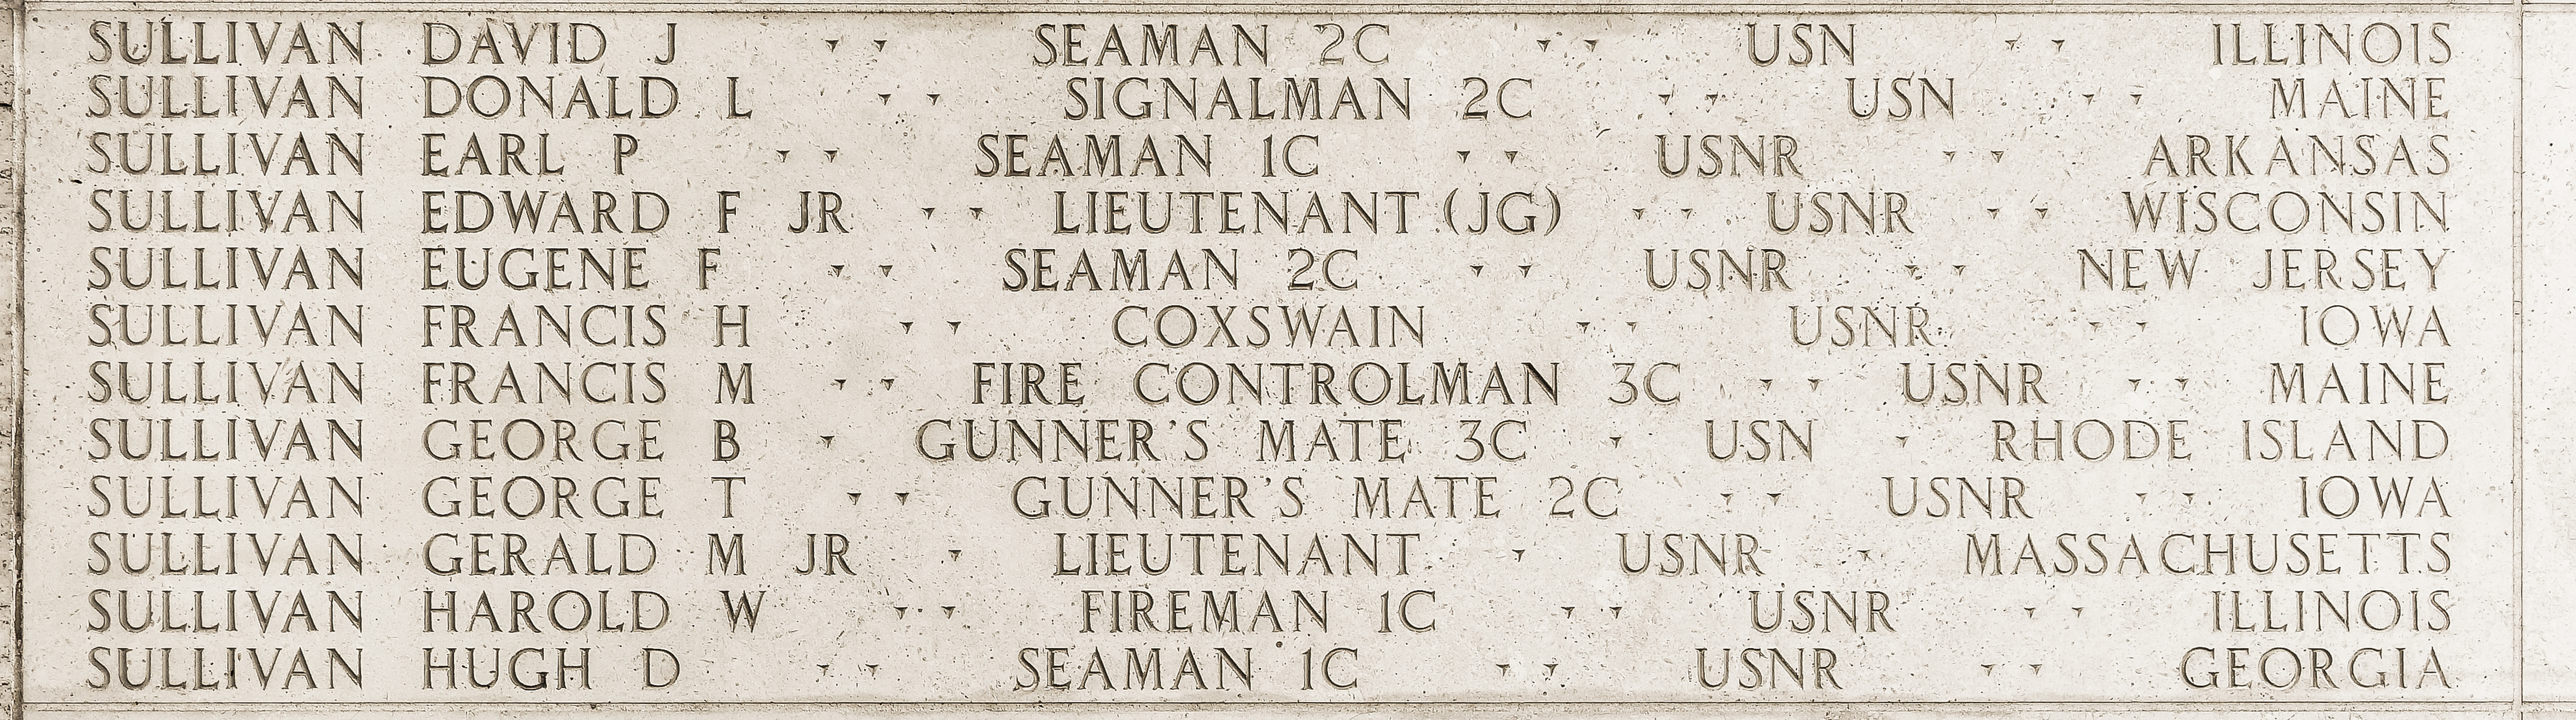 George T. Sullivan, Gunner's Mate Second Class